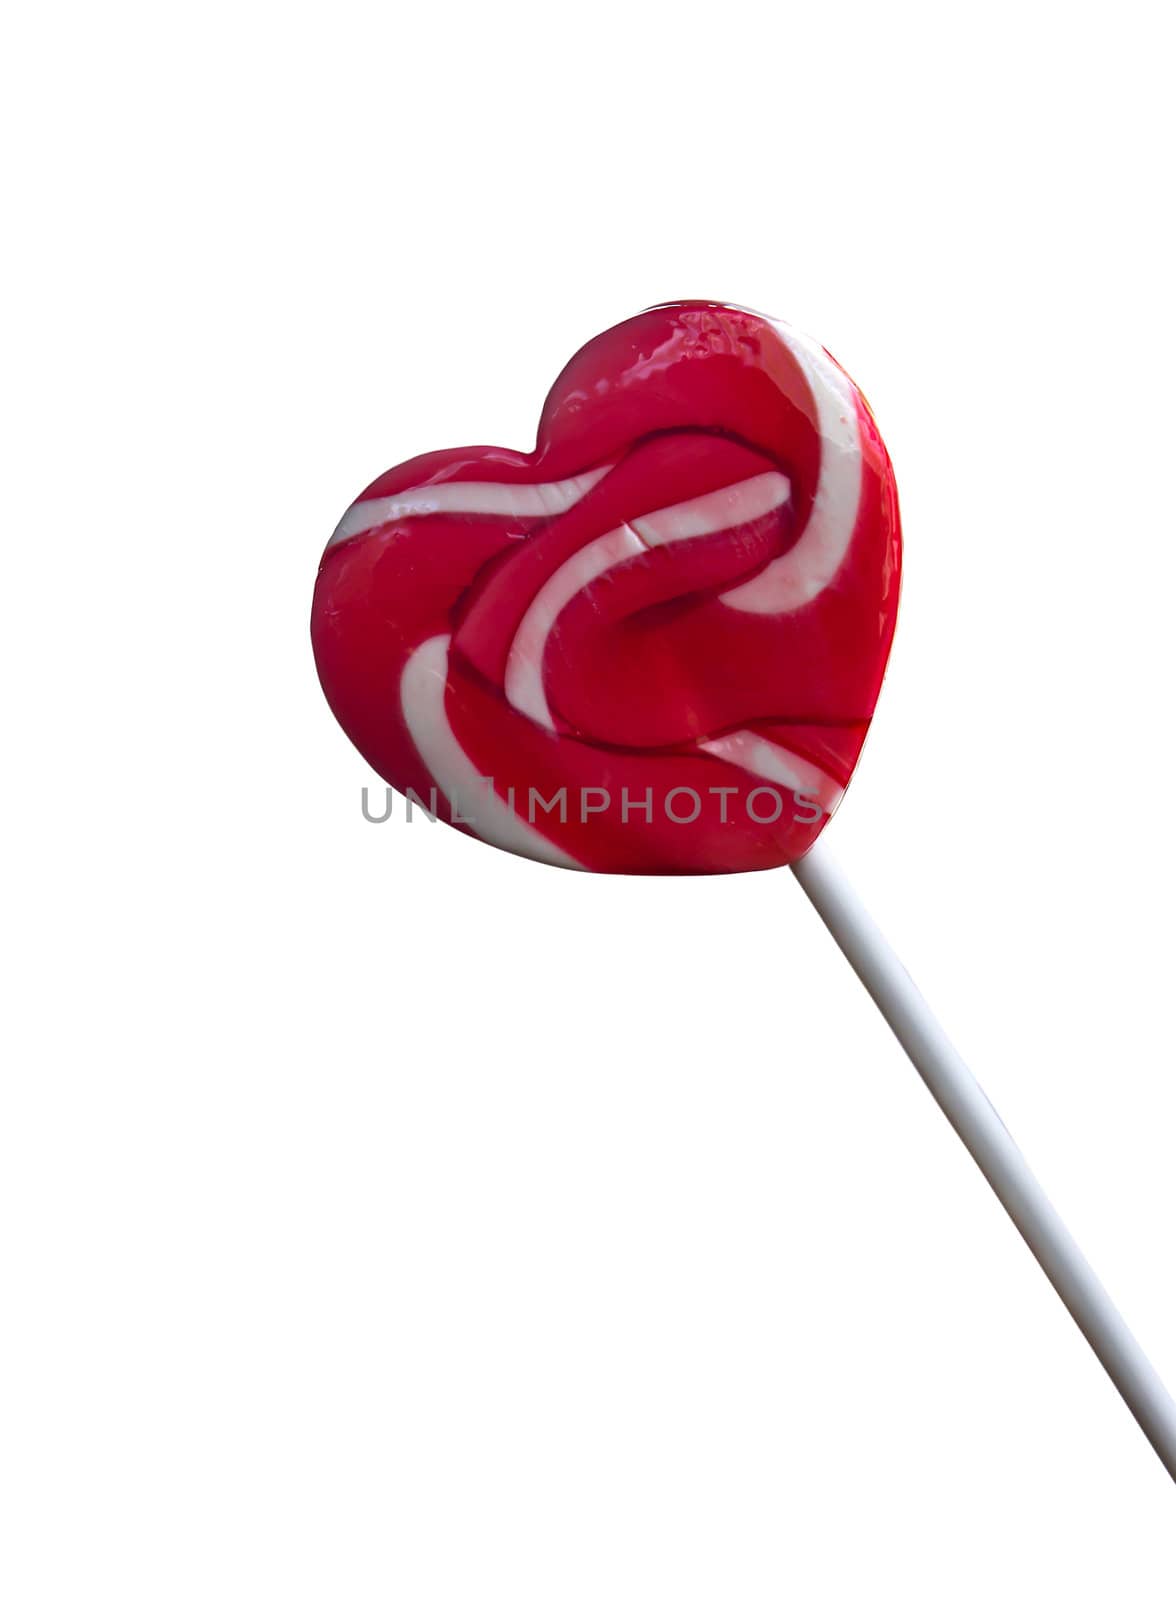 Candy heart on a stick  by stoonn